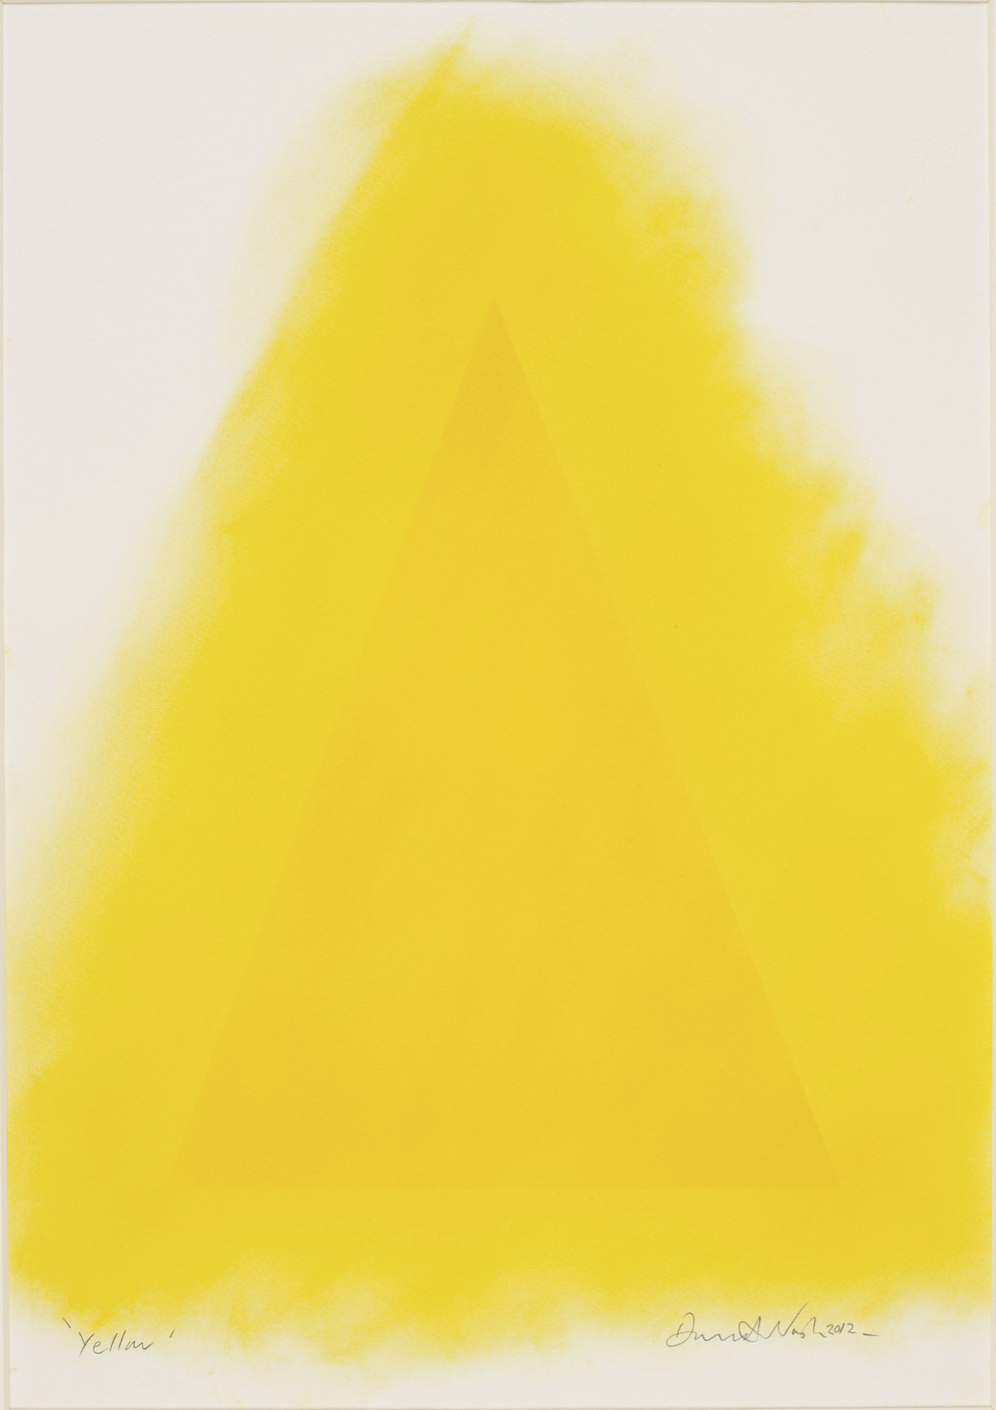 David Nash, "Yellow," 2012, pastel, 53.4 x 37.2 cm, Royal Trust Collection, UK